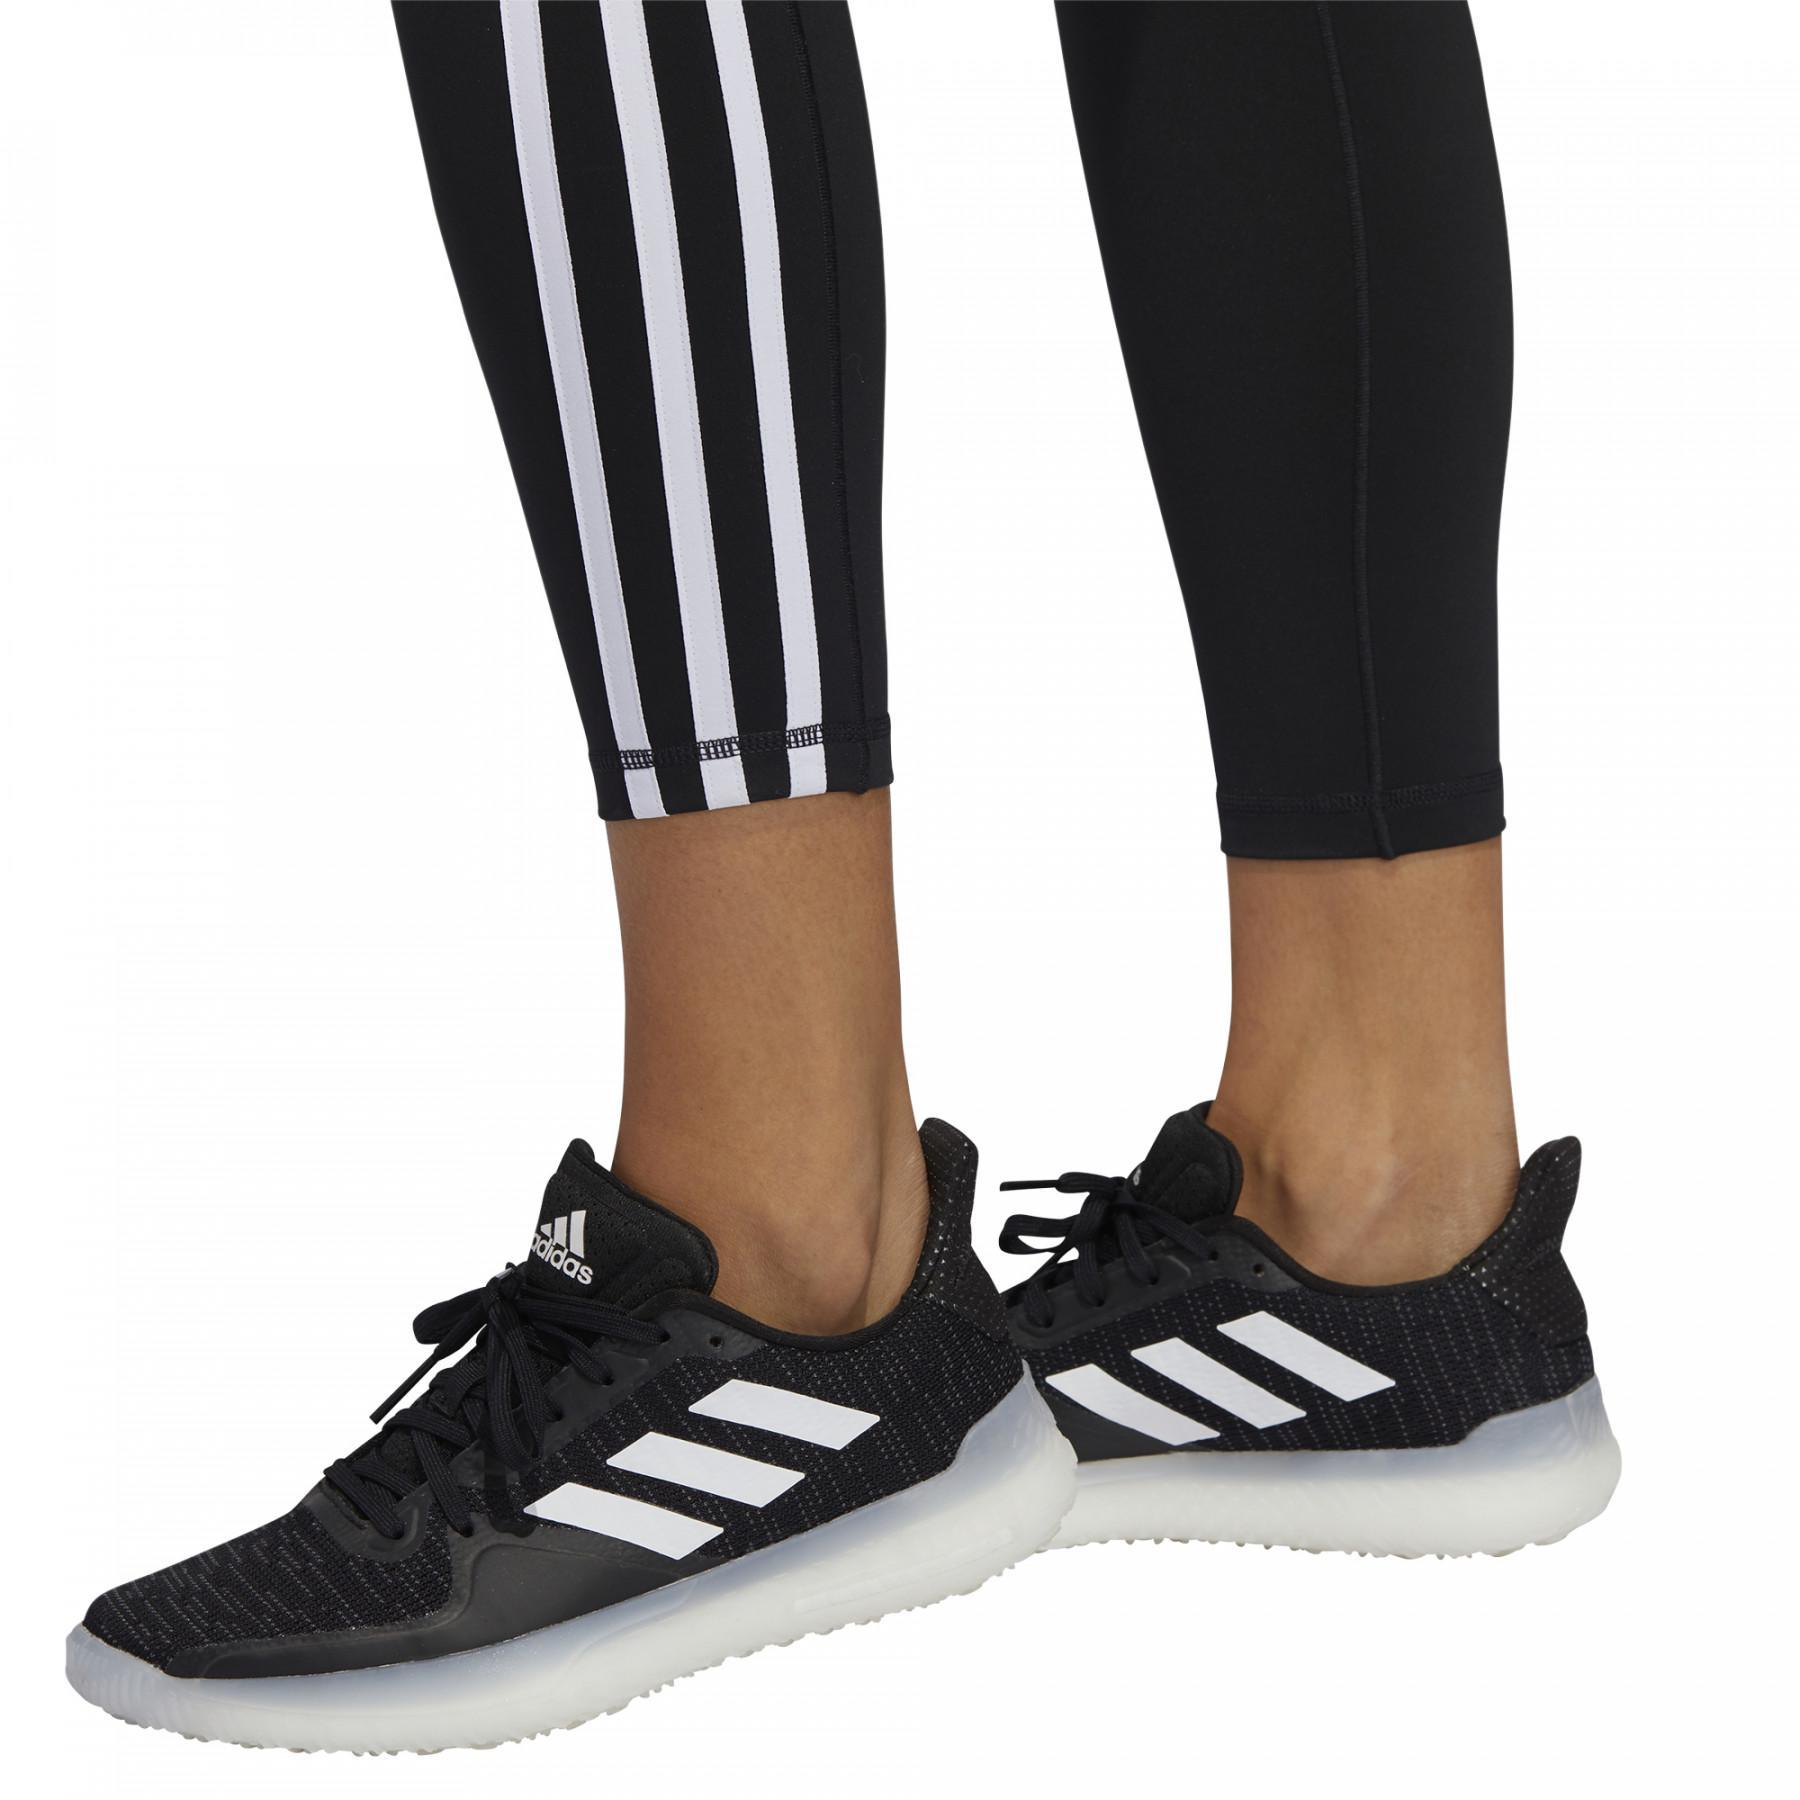 Legging femme 7/8 adidas Believe This 3-Stripes